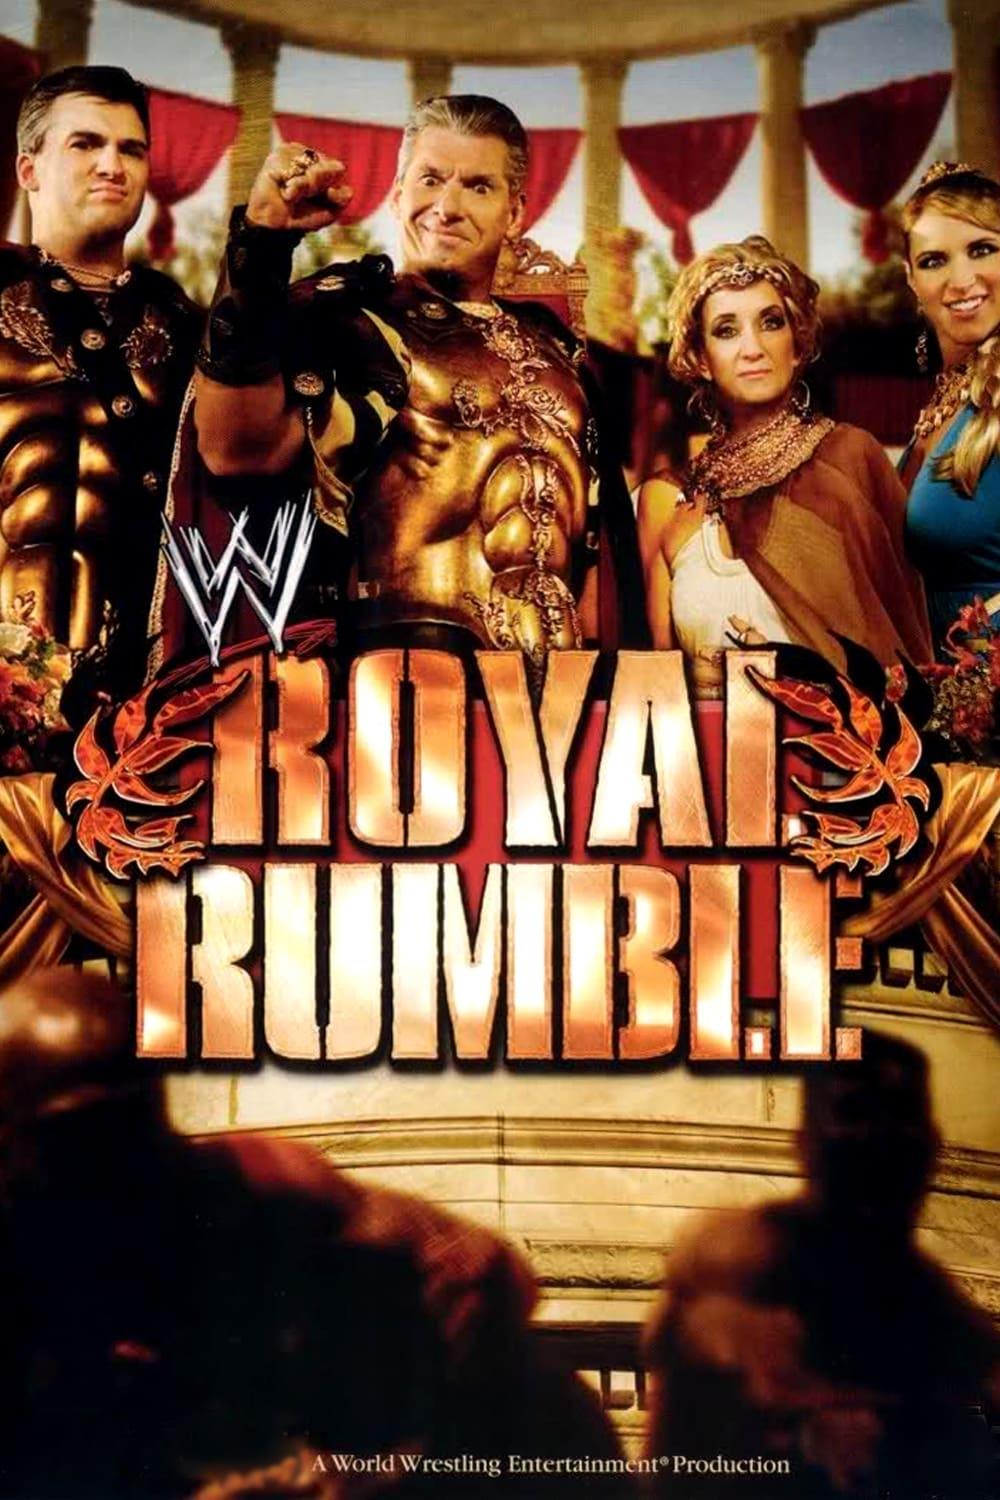 WWE Royal Rumble 2006 poster